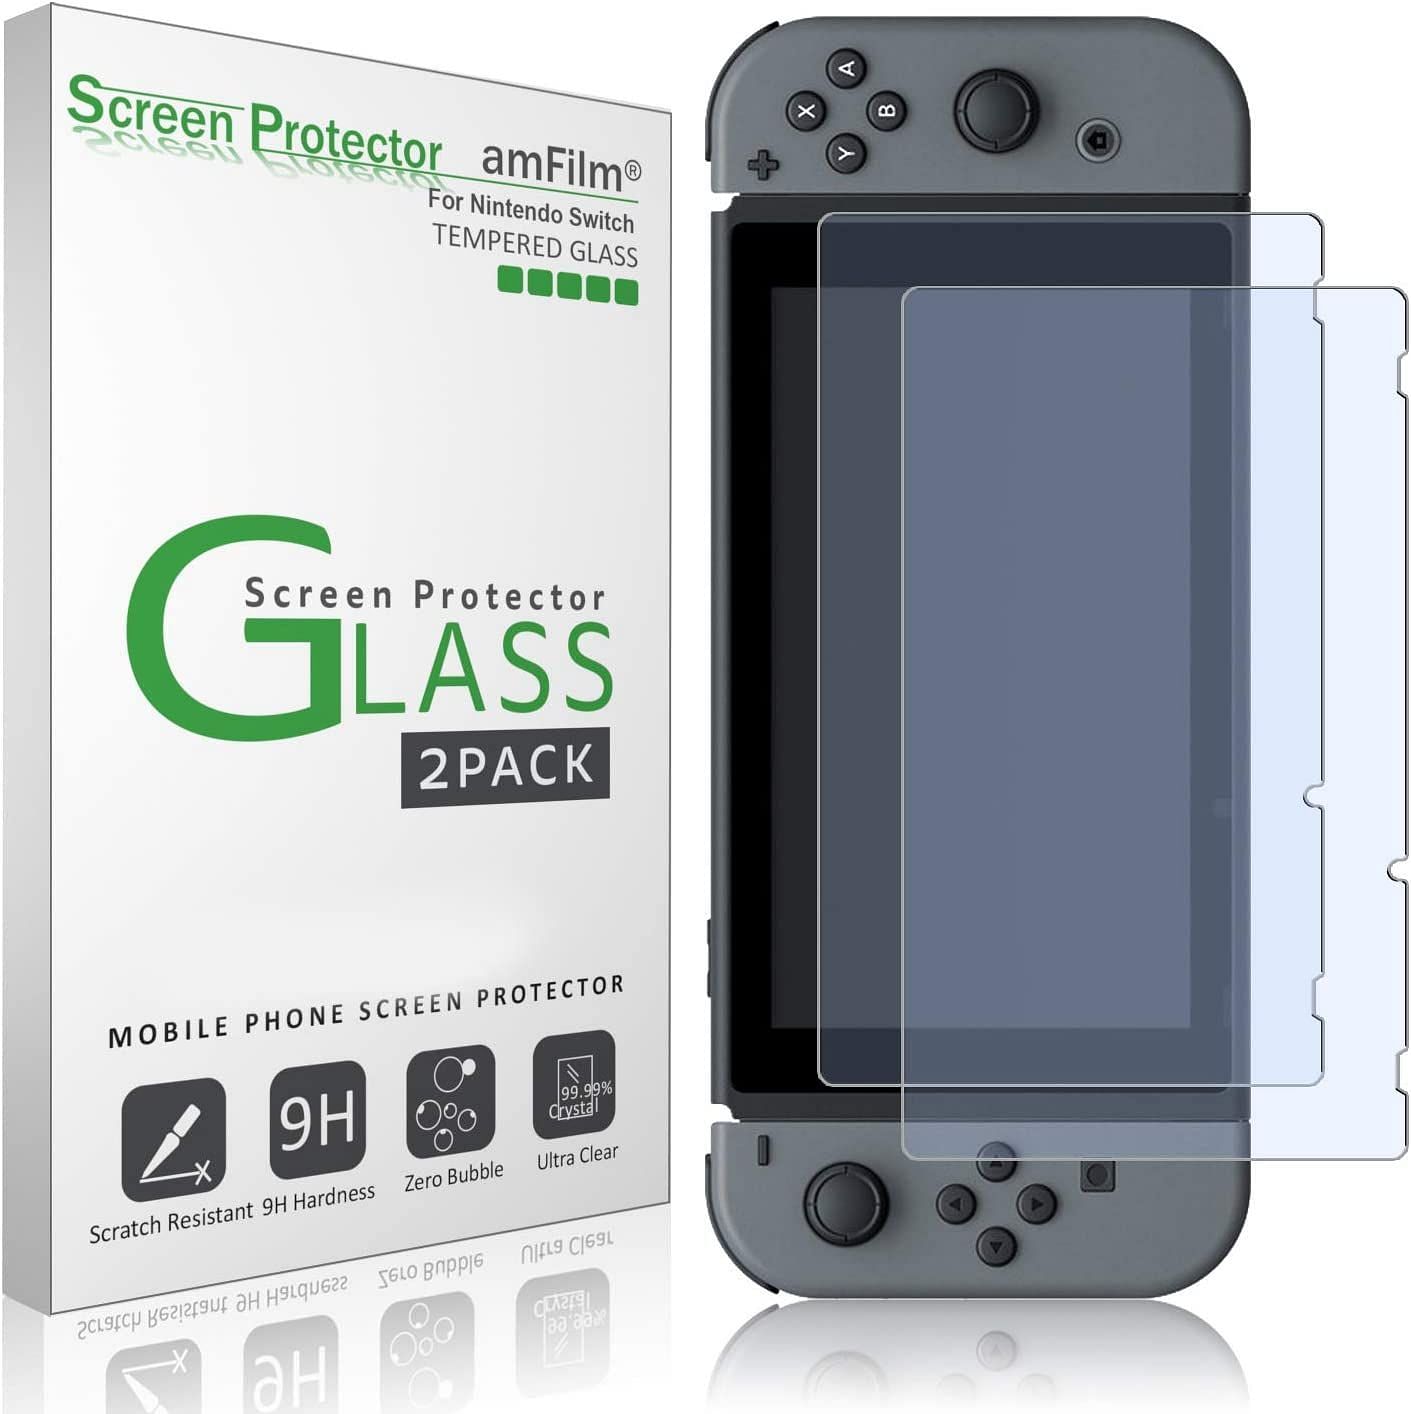 amFilm Tempered Glass Screen Protector for Nintendo Switch (Image via amFilm)